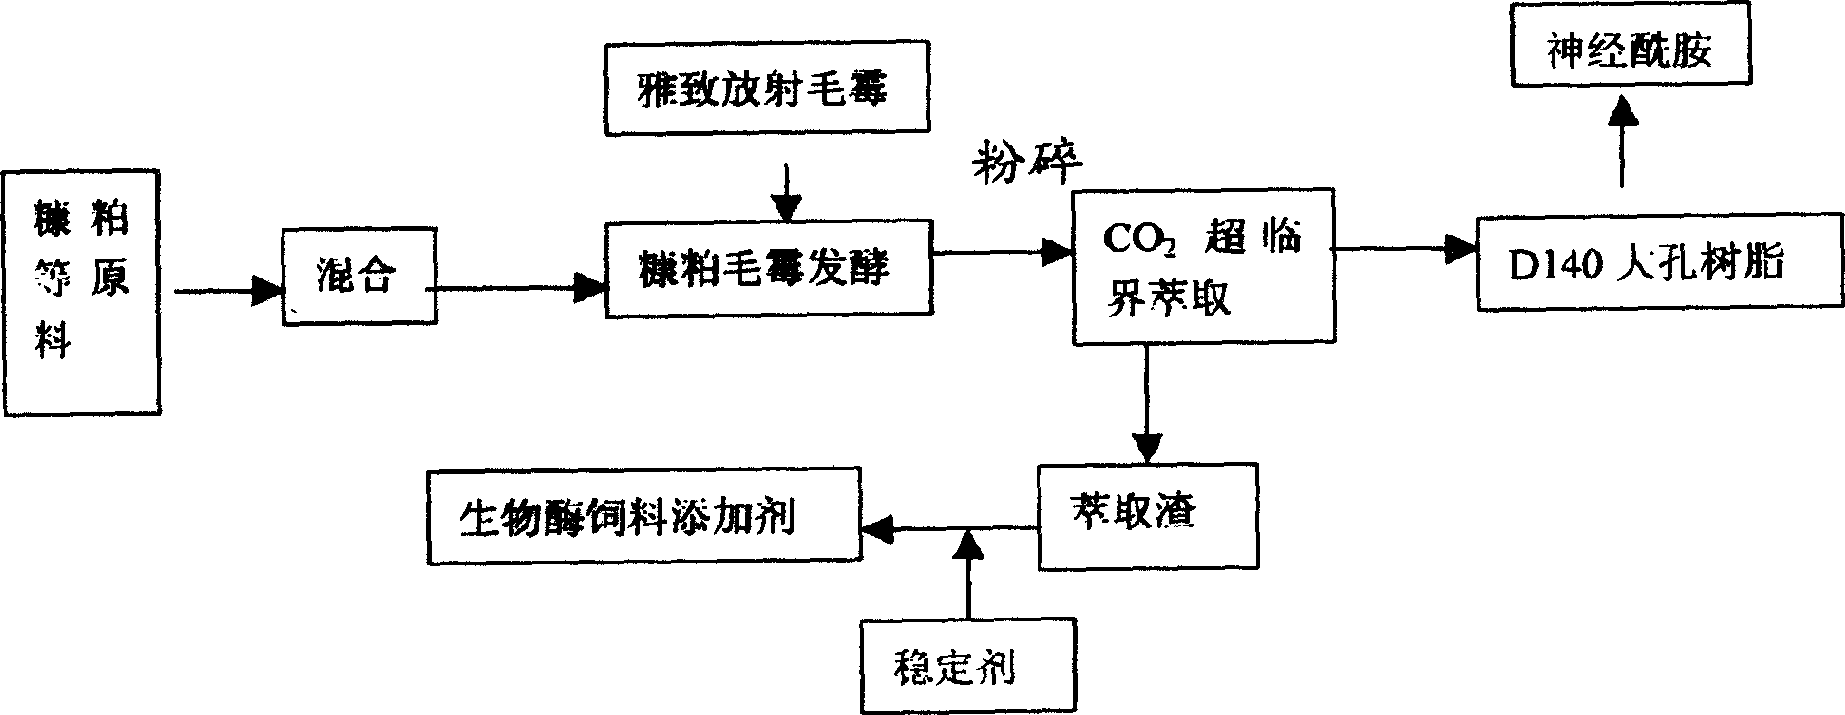 Application of Yazhi-fangshe Mucor in use for preparing ceramide